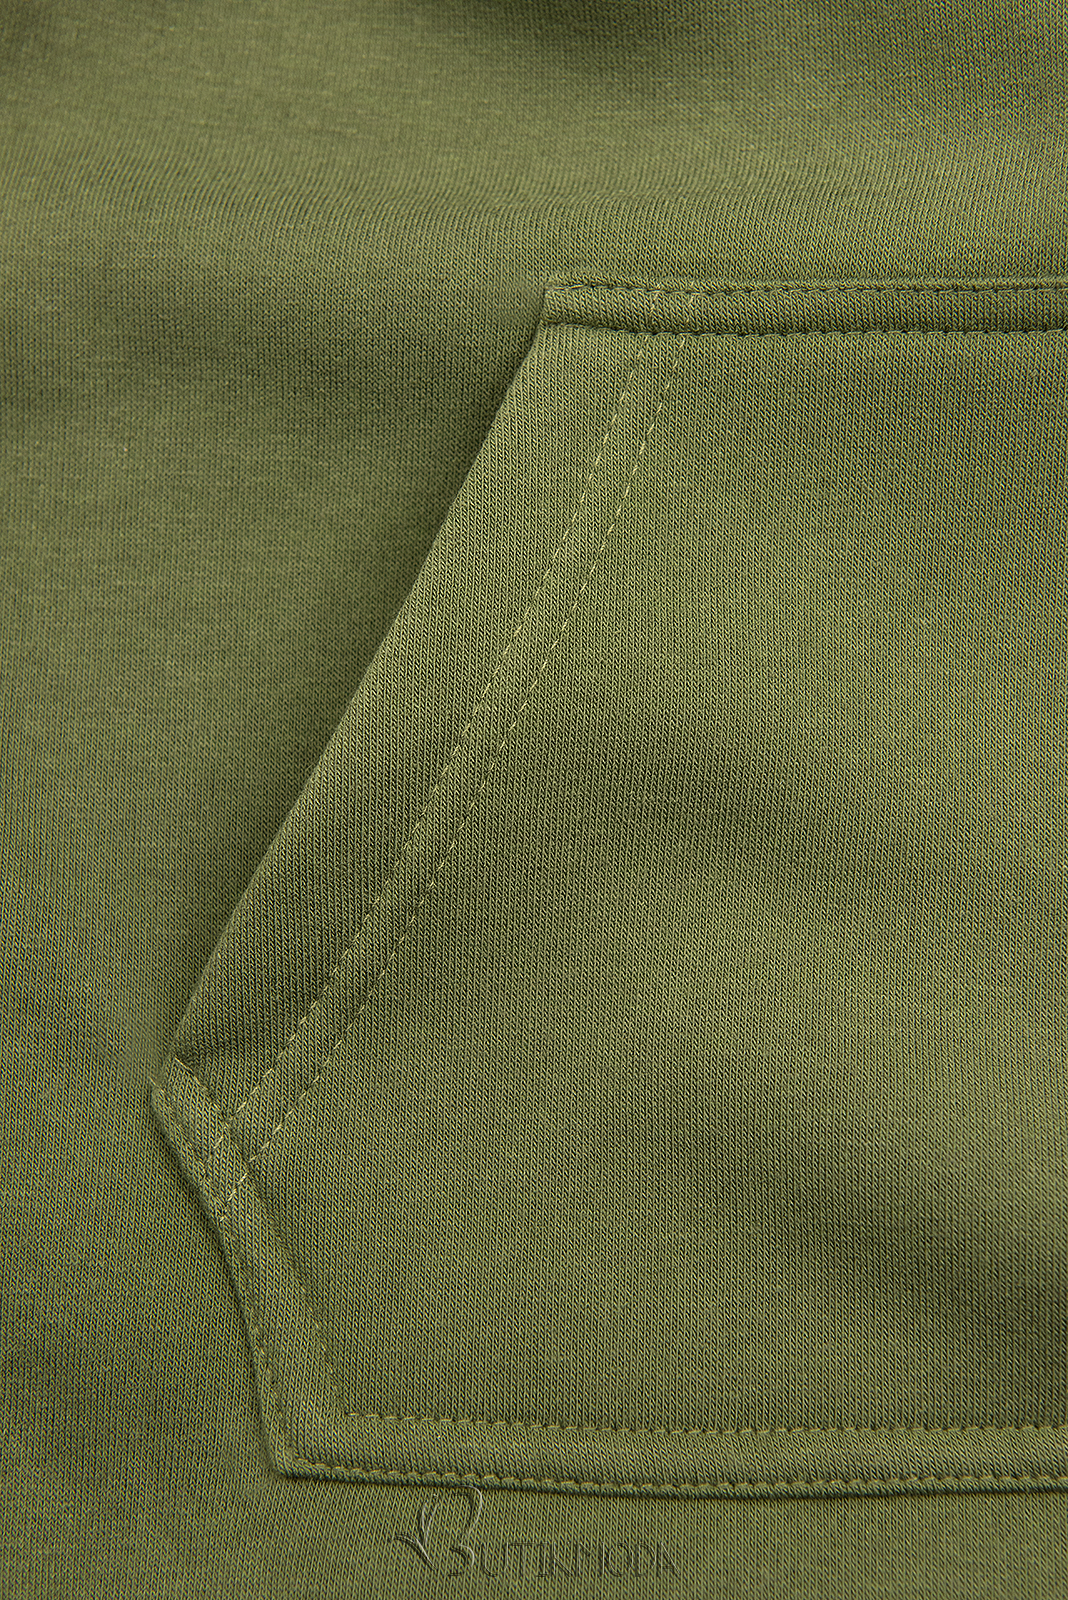 Green over-the-head sweatshirt dress